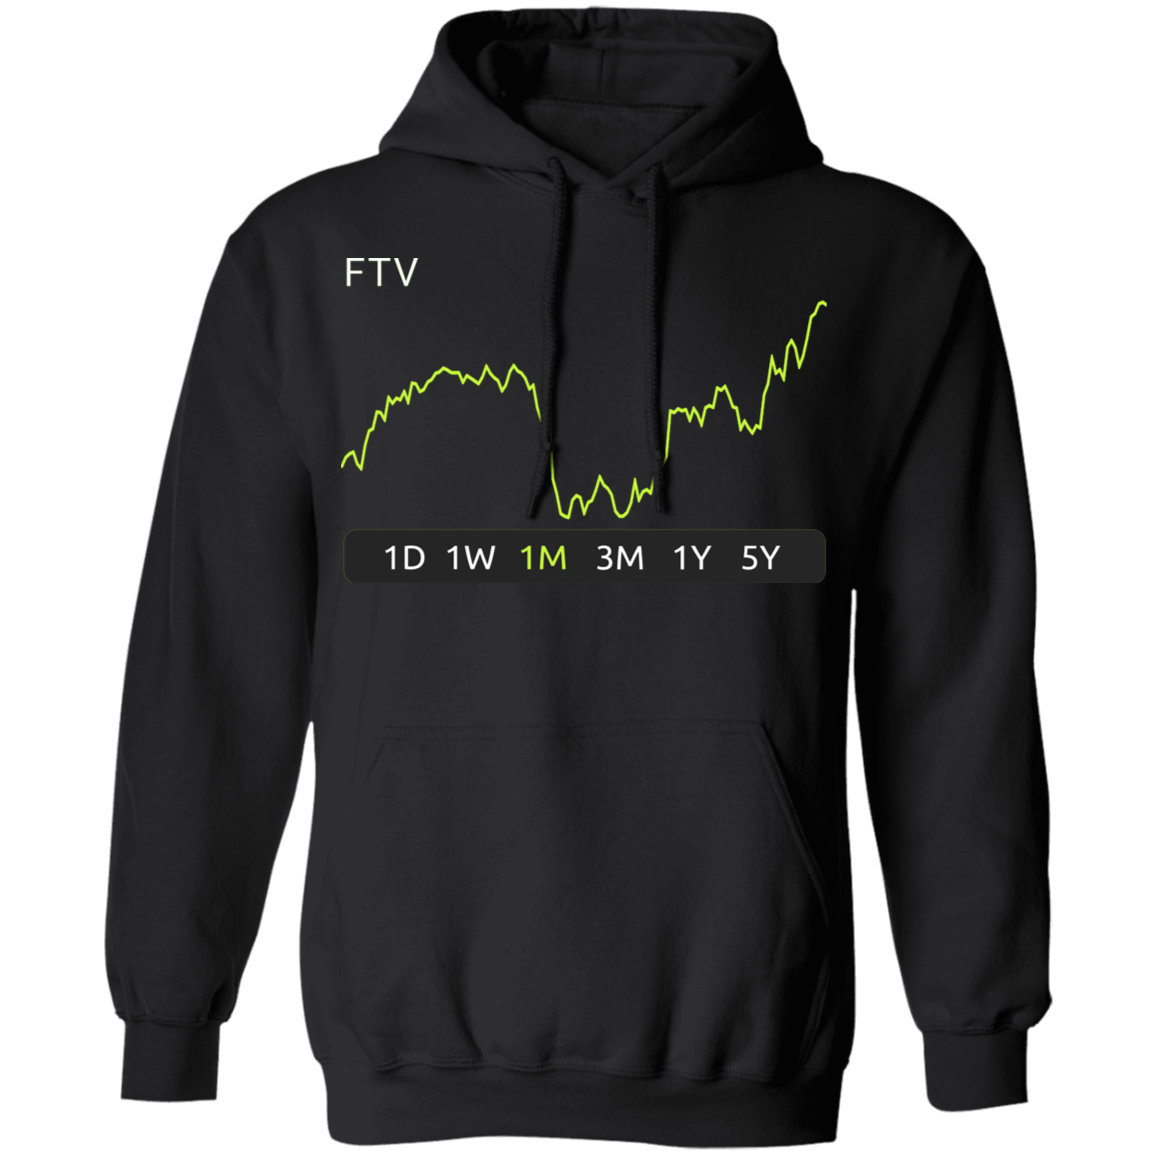 FTV Stock 1m Pullover Hoodie